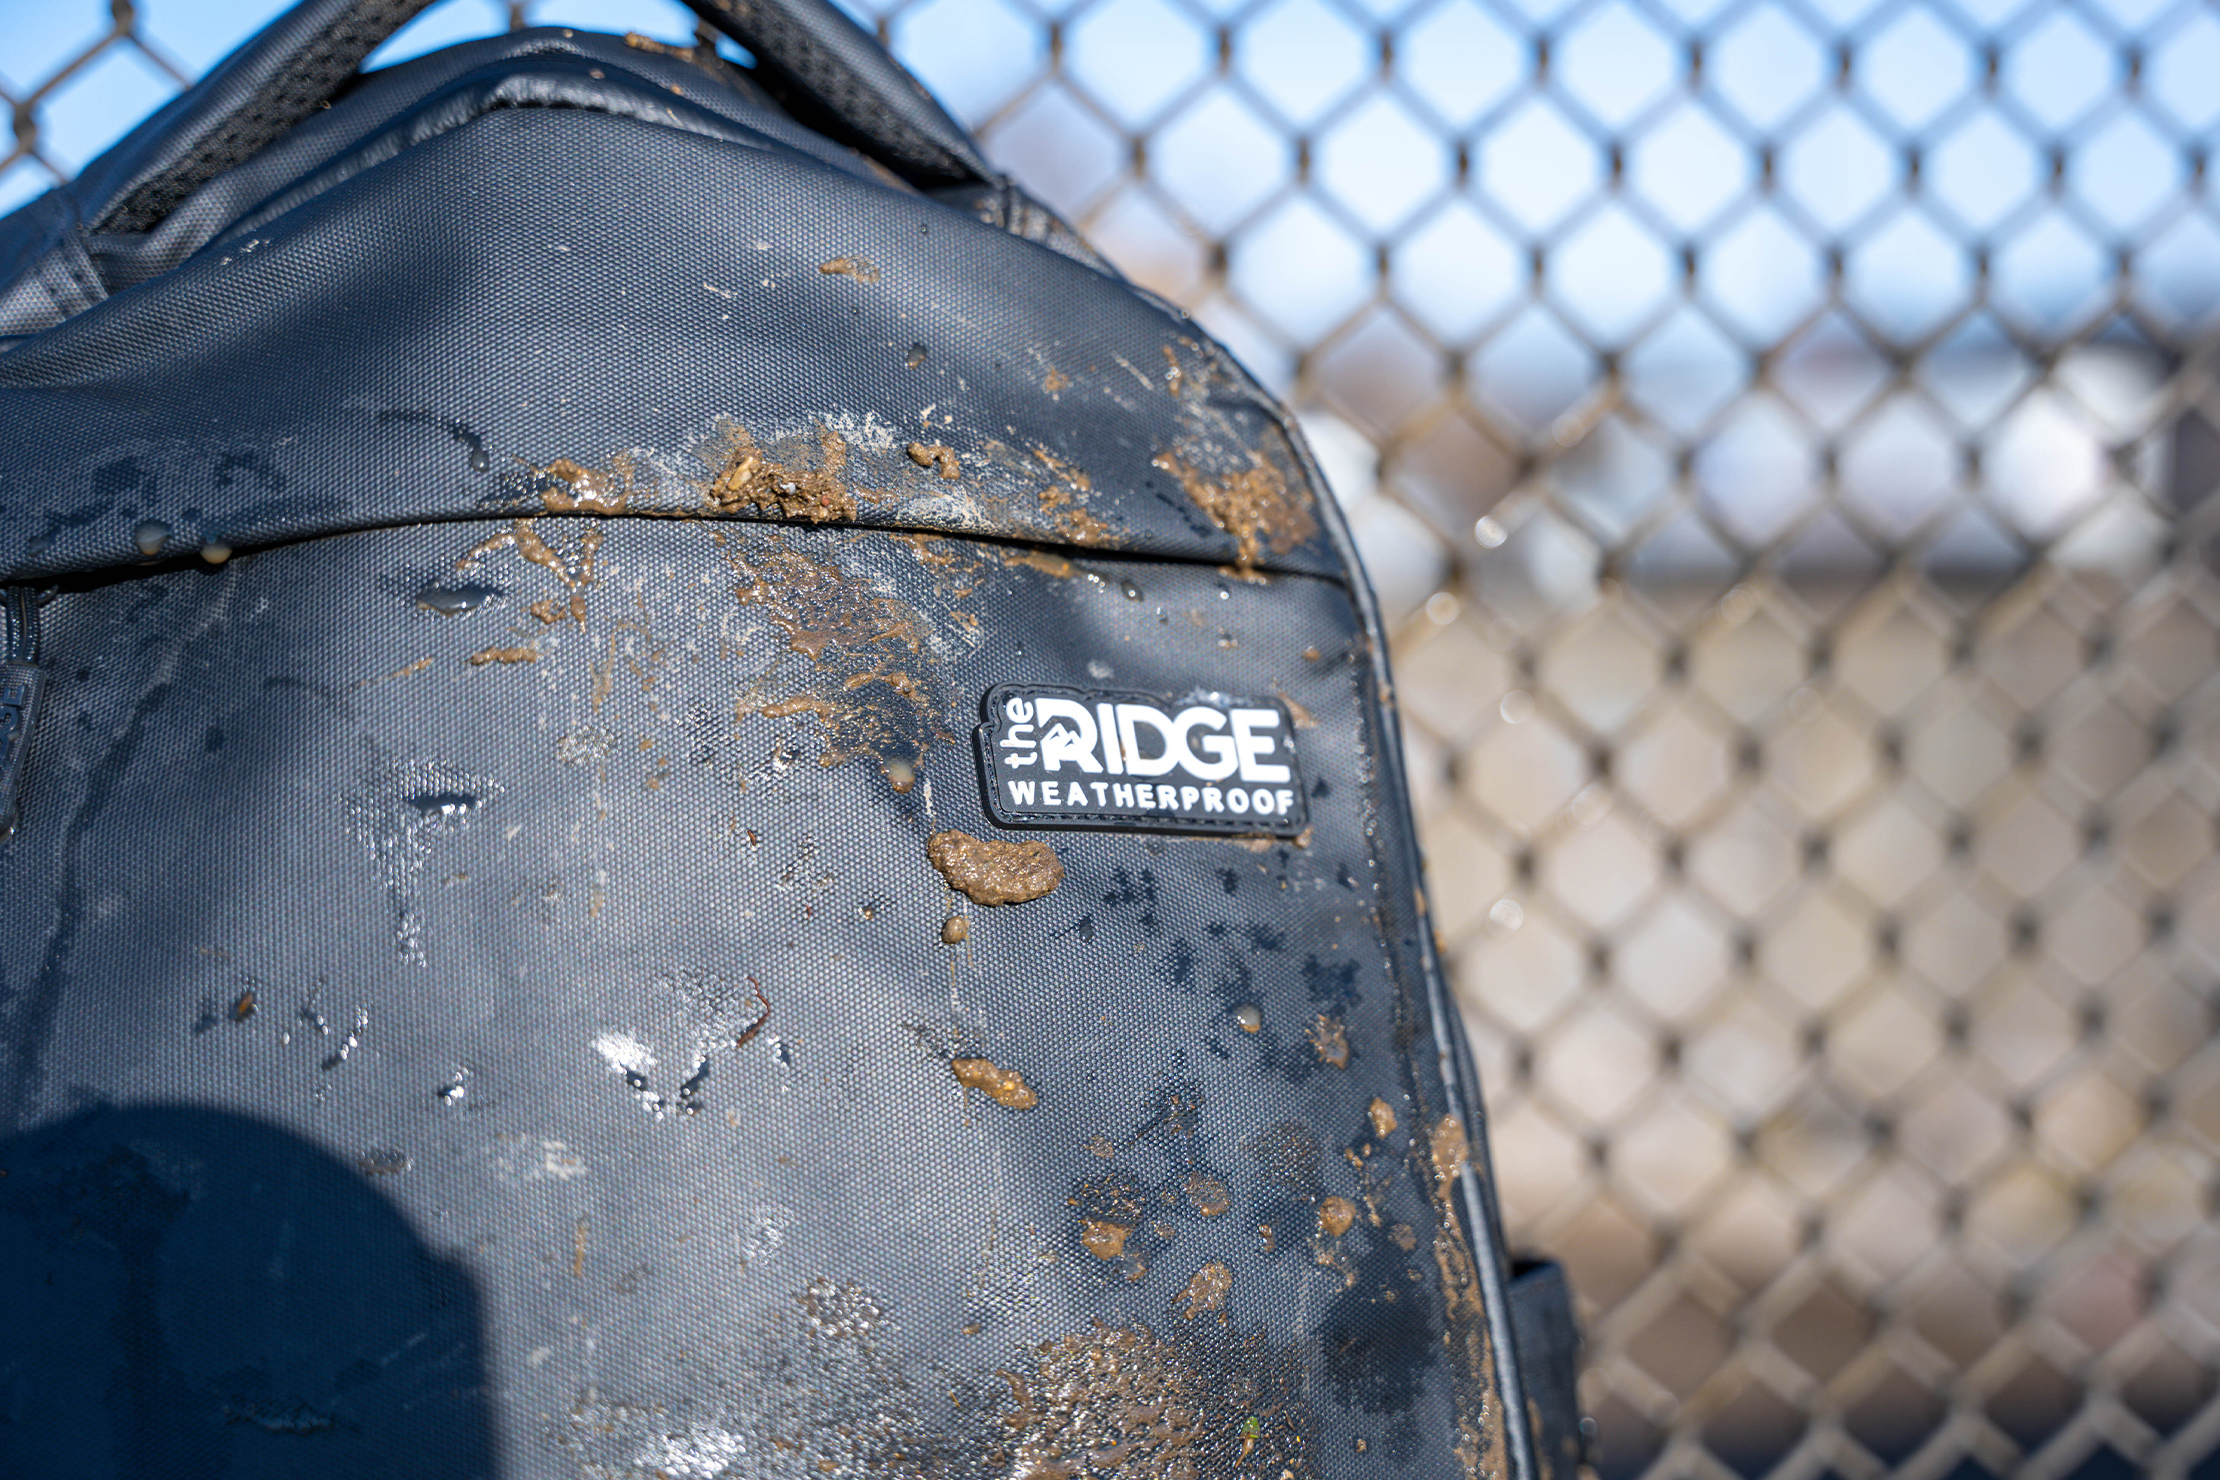 The Ridge Commuter Backpack Weatherproof